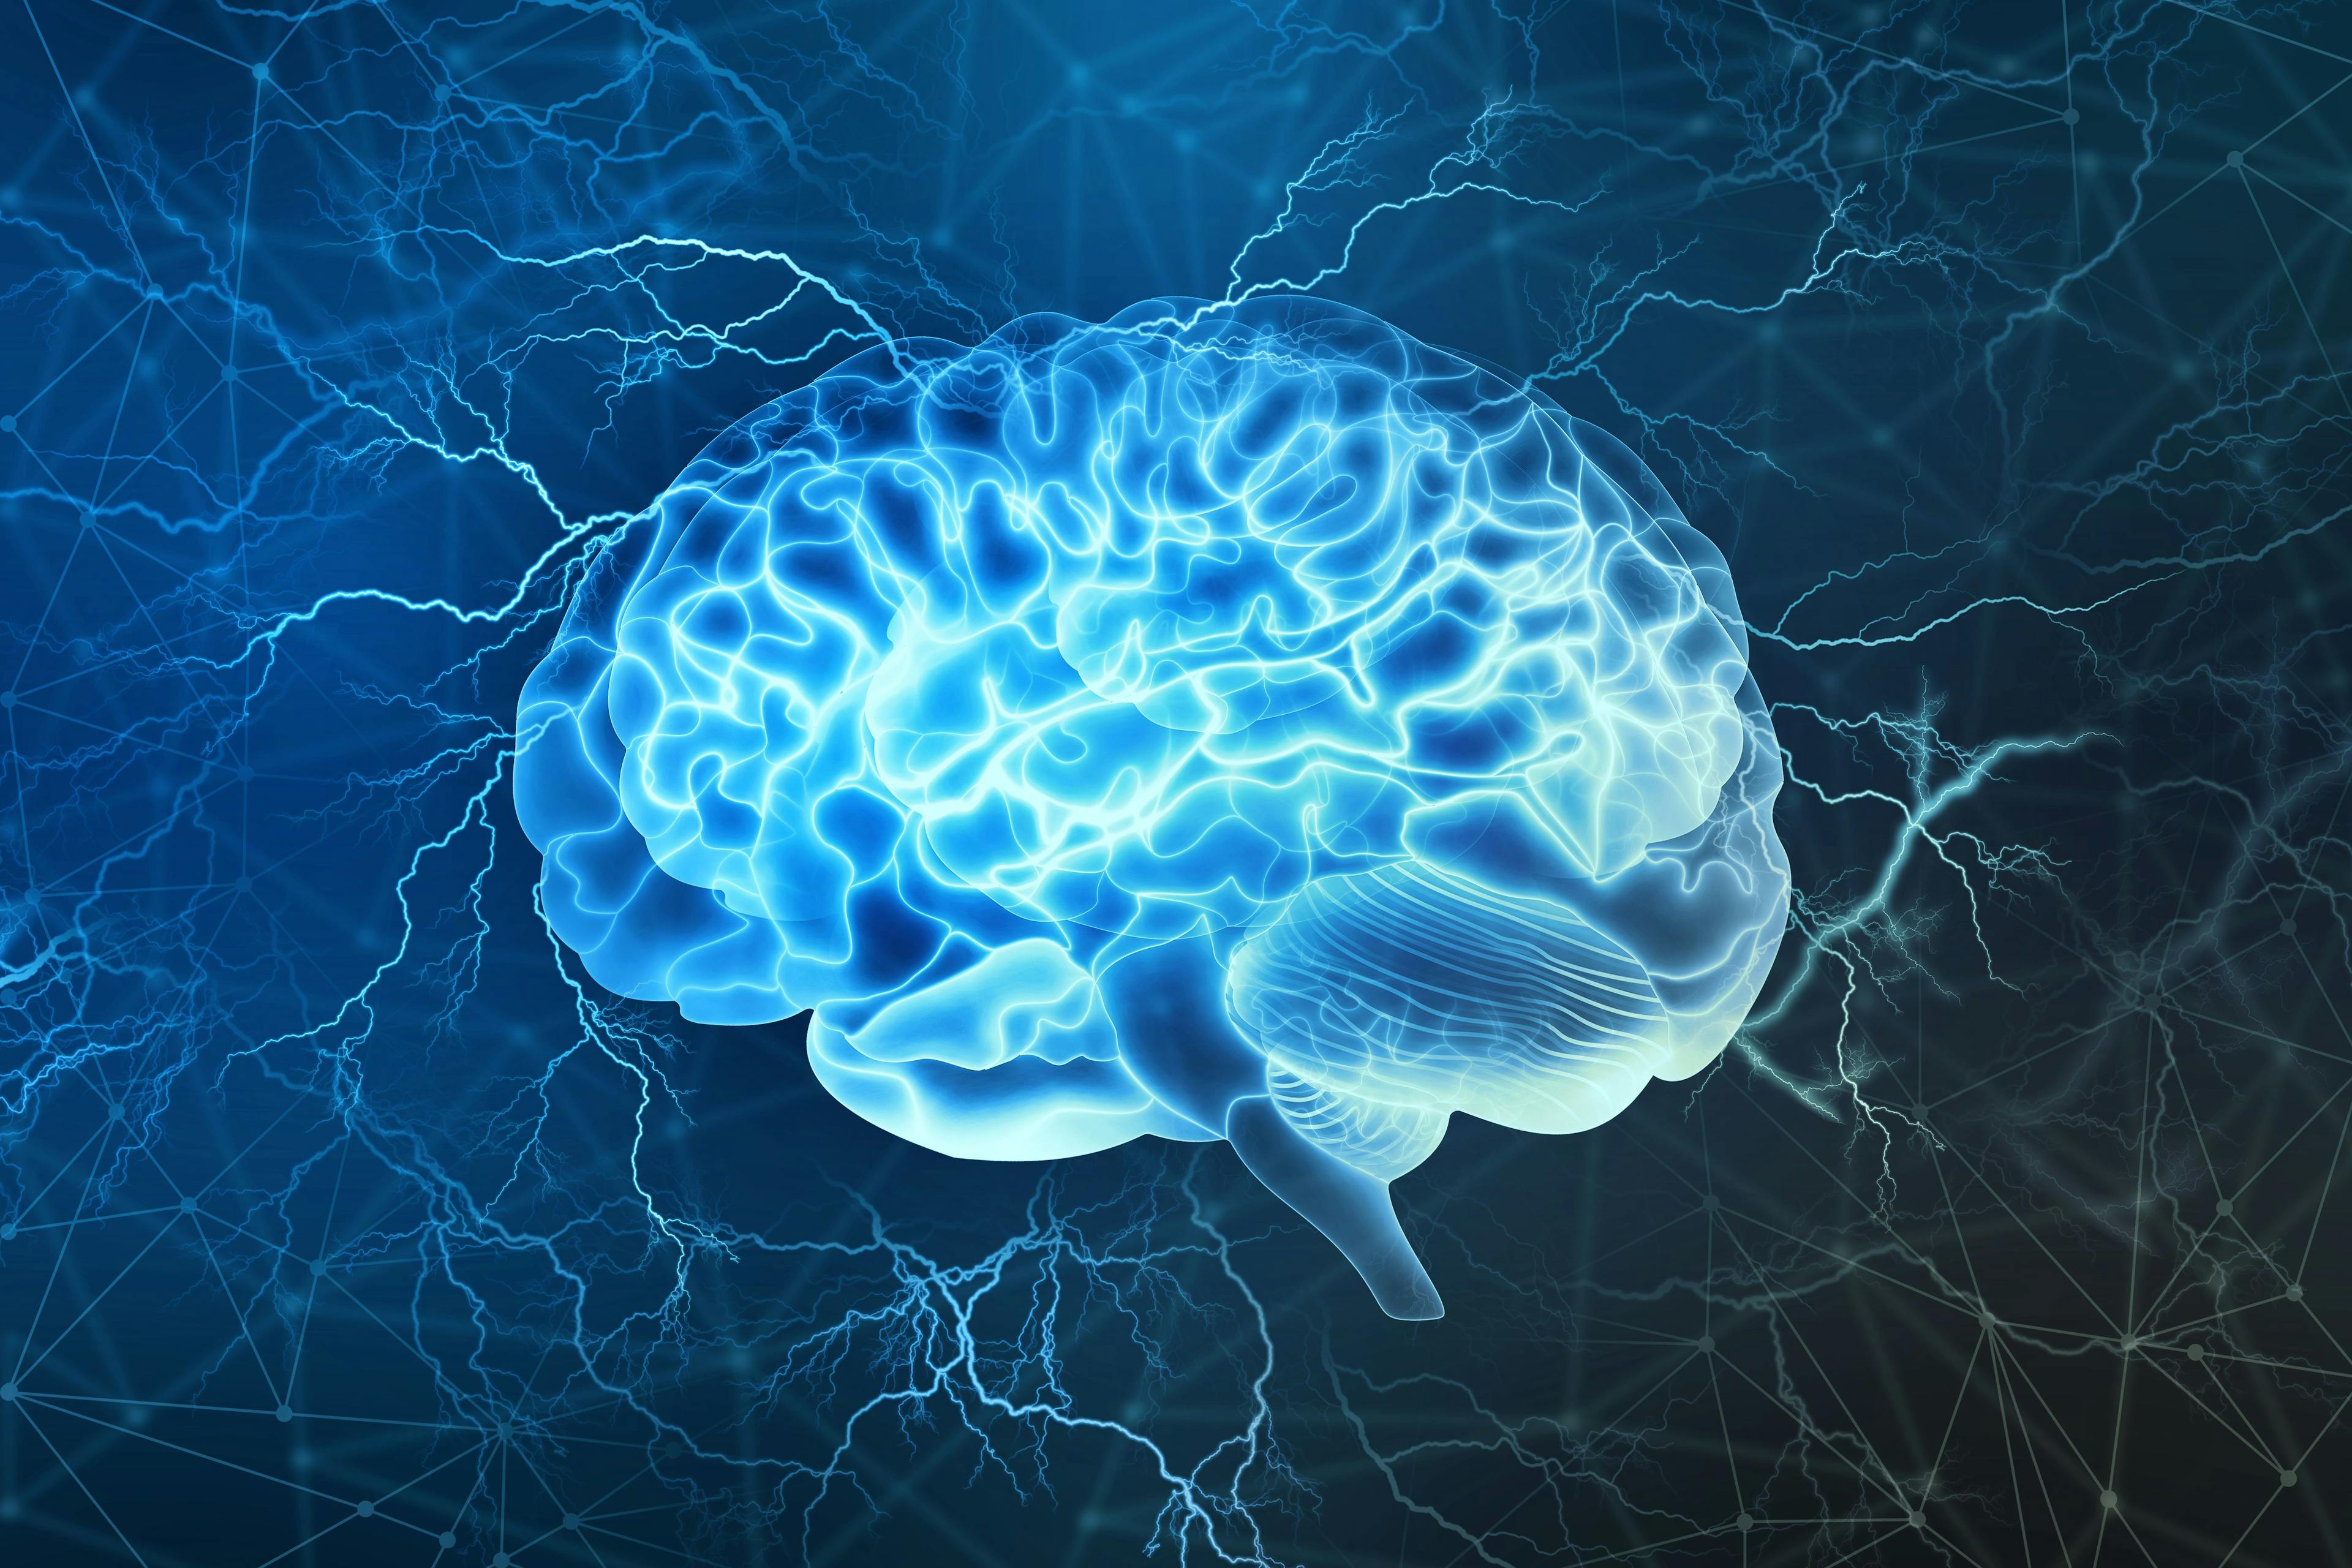 Human brain | Image credit: Siarhei - stock.adobe.com